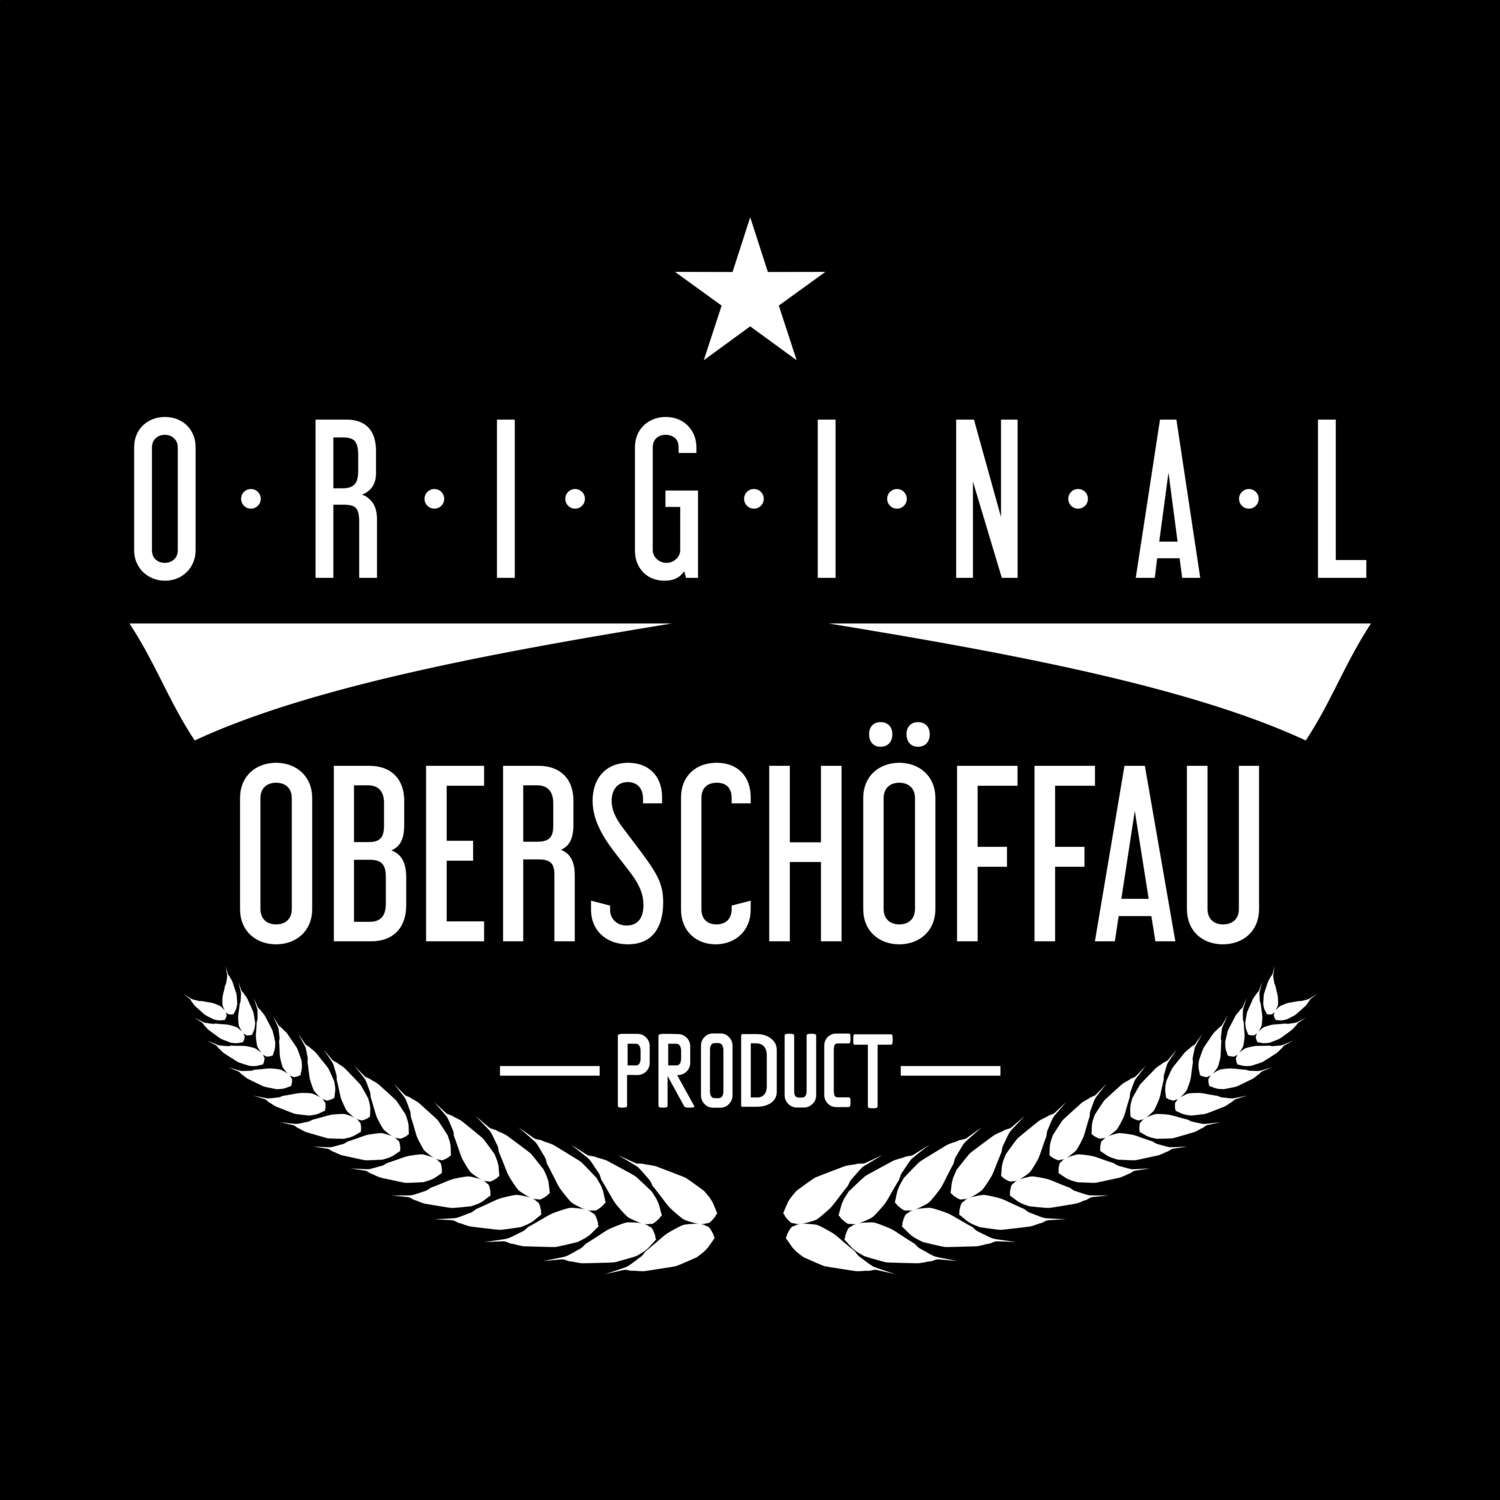 Oberschöffau T-Shirt »Original Product«